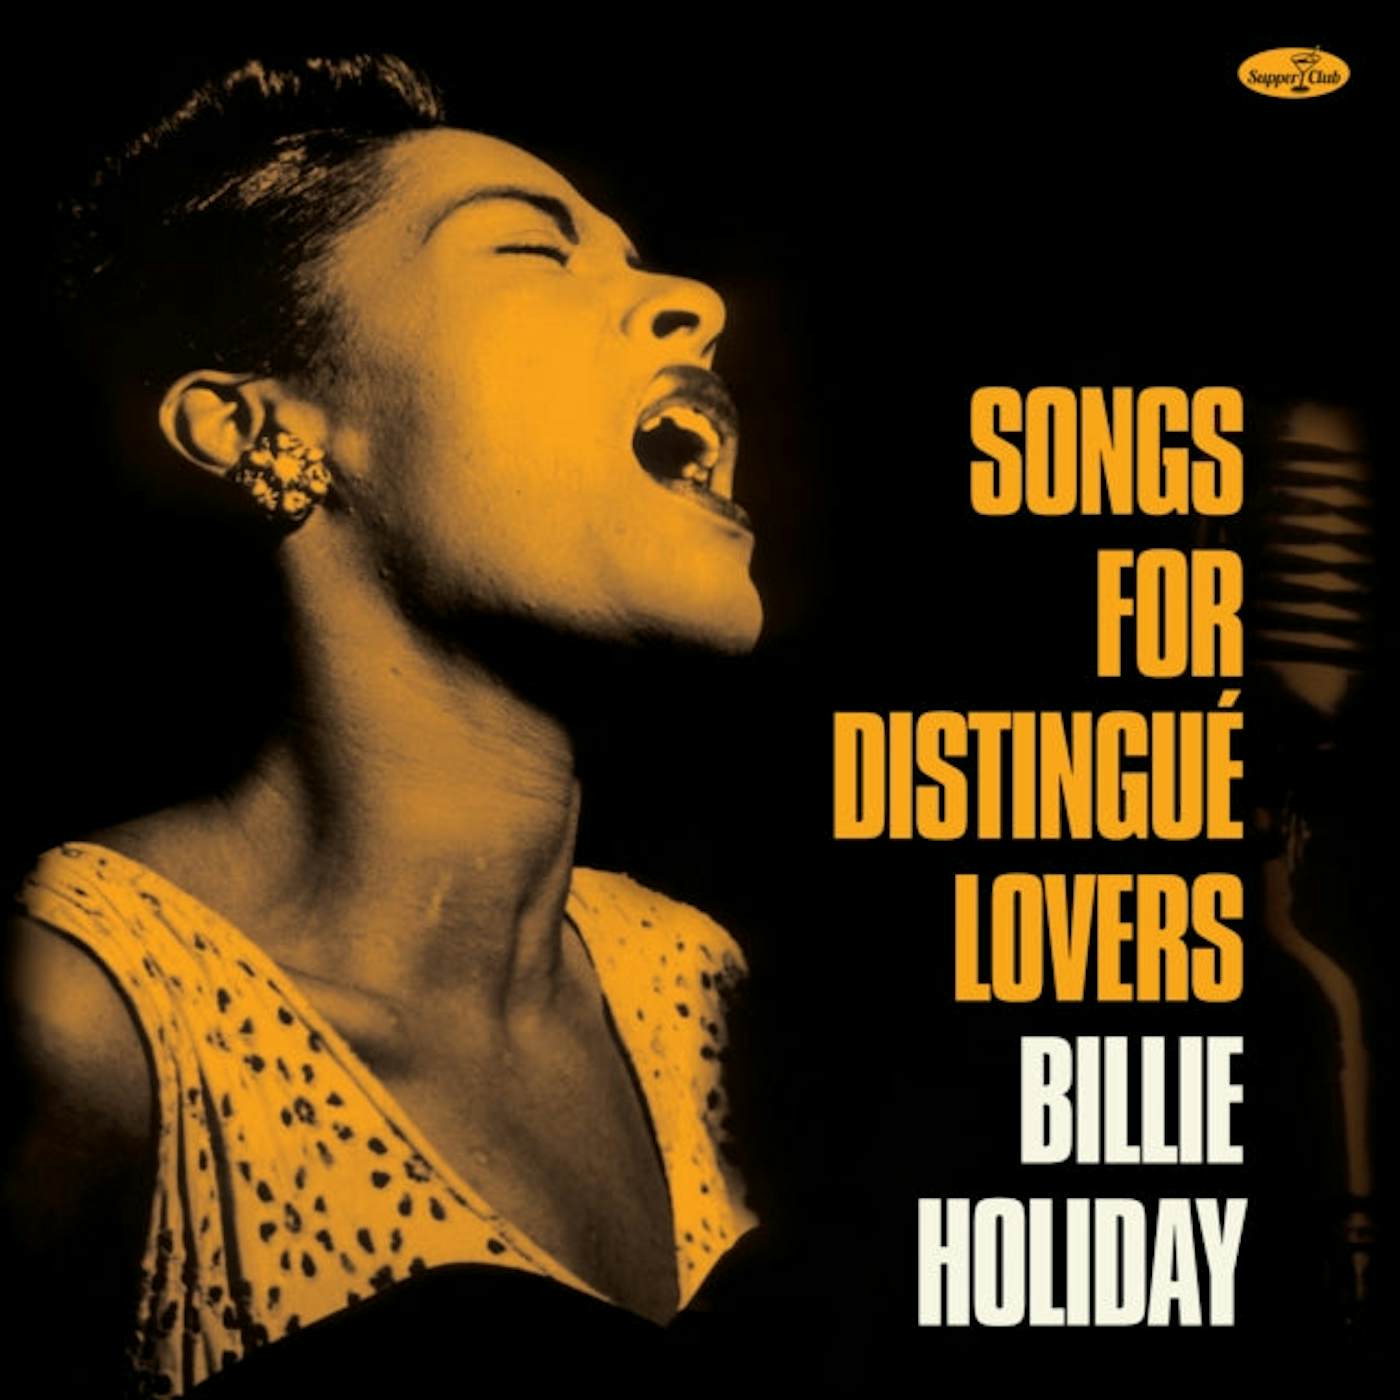  Billie Holiday LP - Songs For Distingue Lovers (+5 Bonus Tracks) (Limited Edition) (Vinyl)